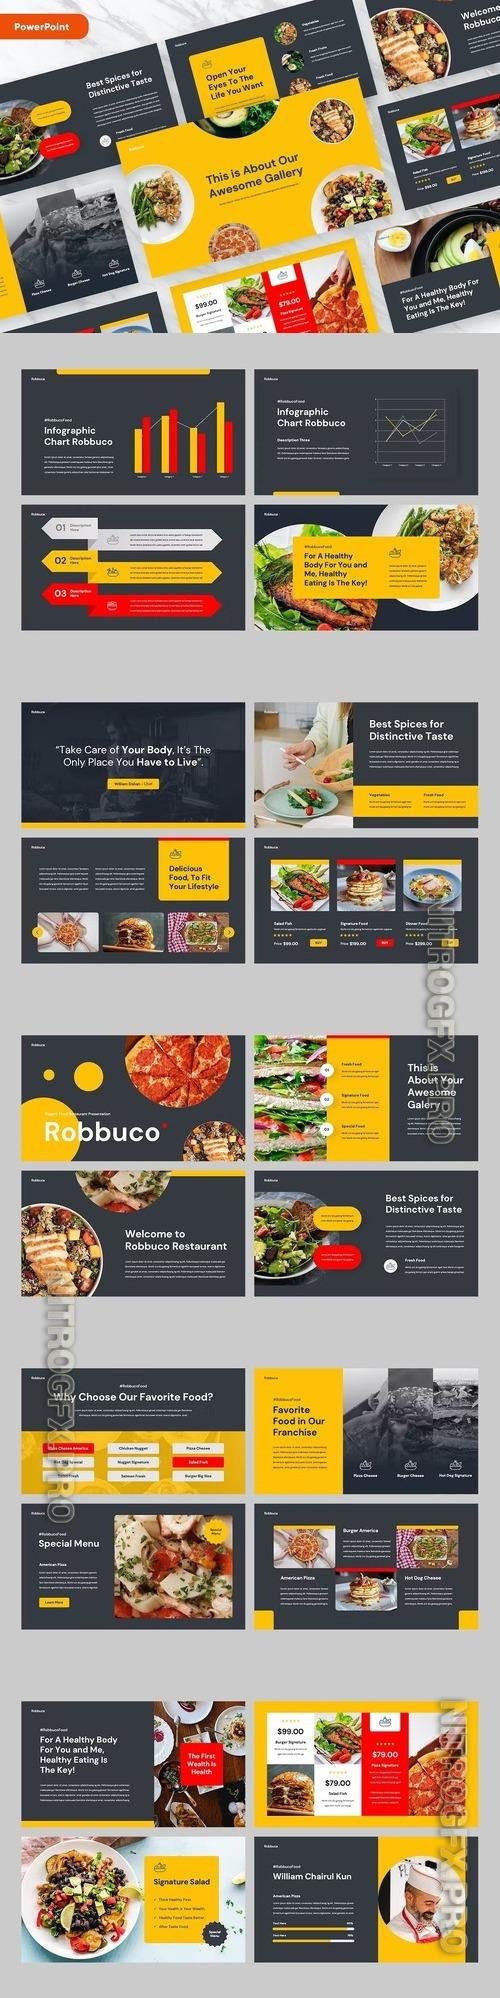 ROBBUCO - Food & Restaurant Powerpoint Template